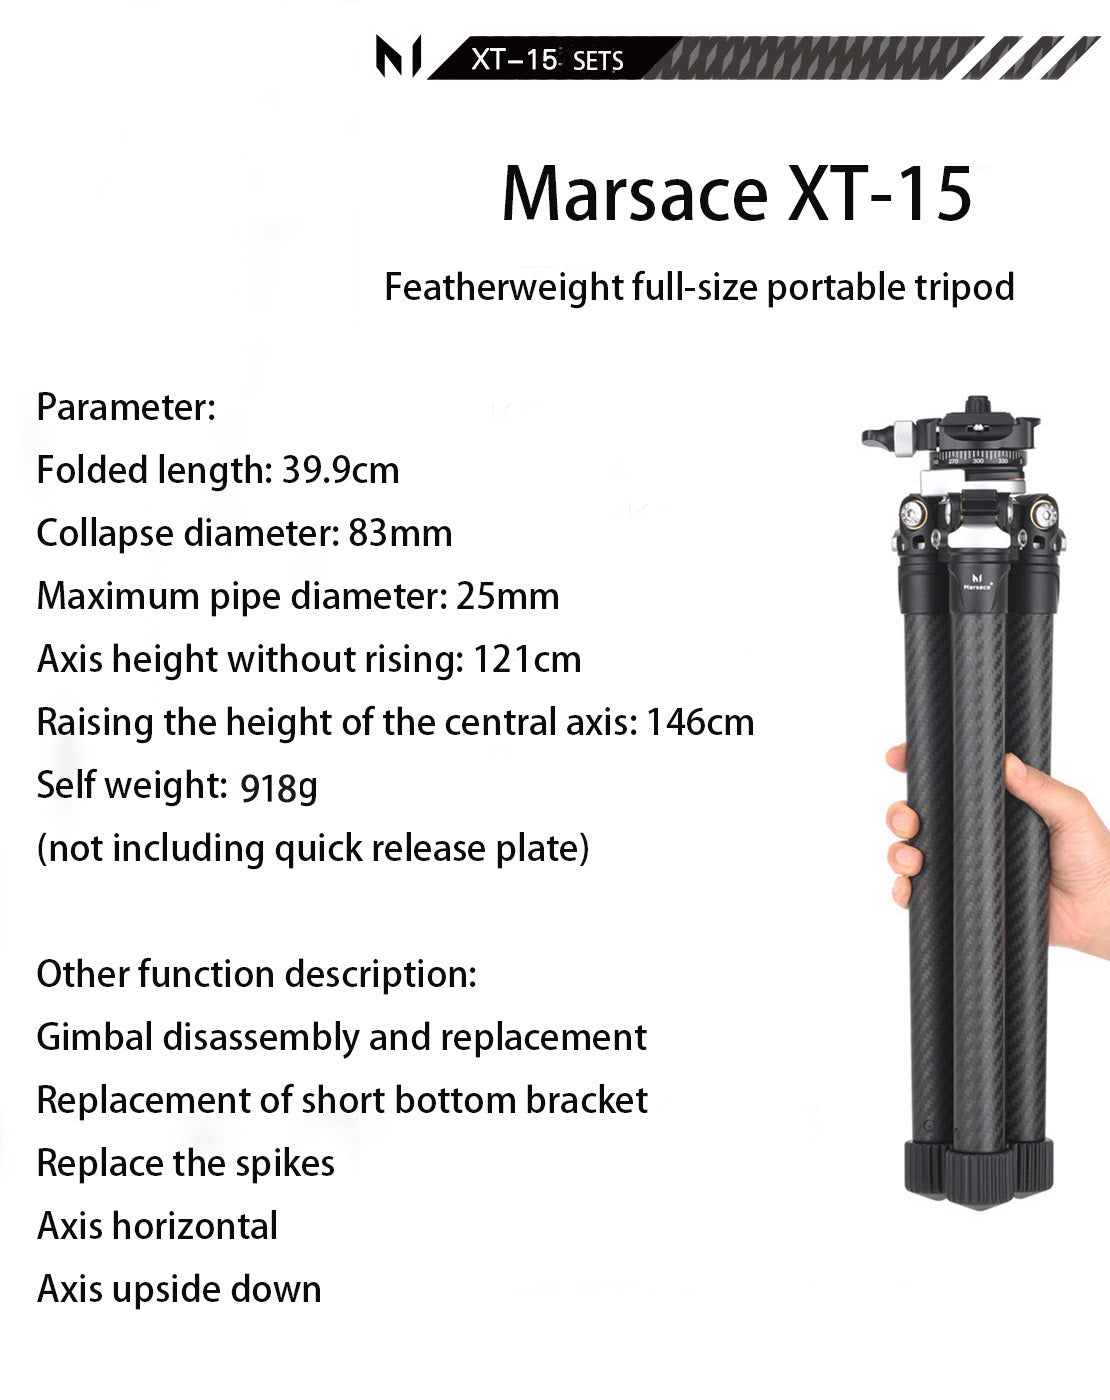 Marsace XT-15 Featherweight Professional portable tripod